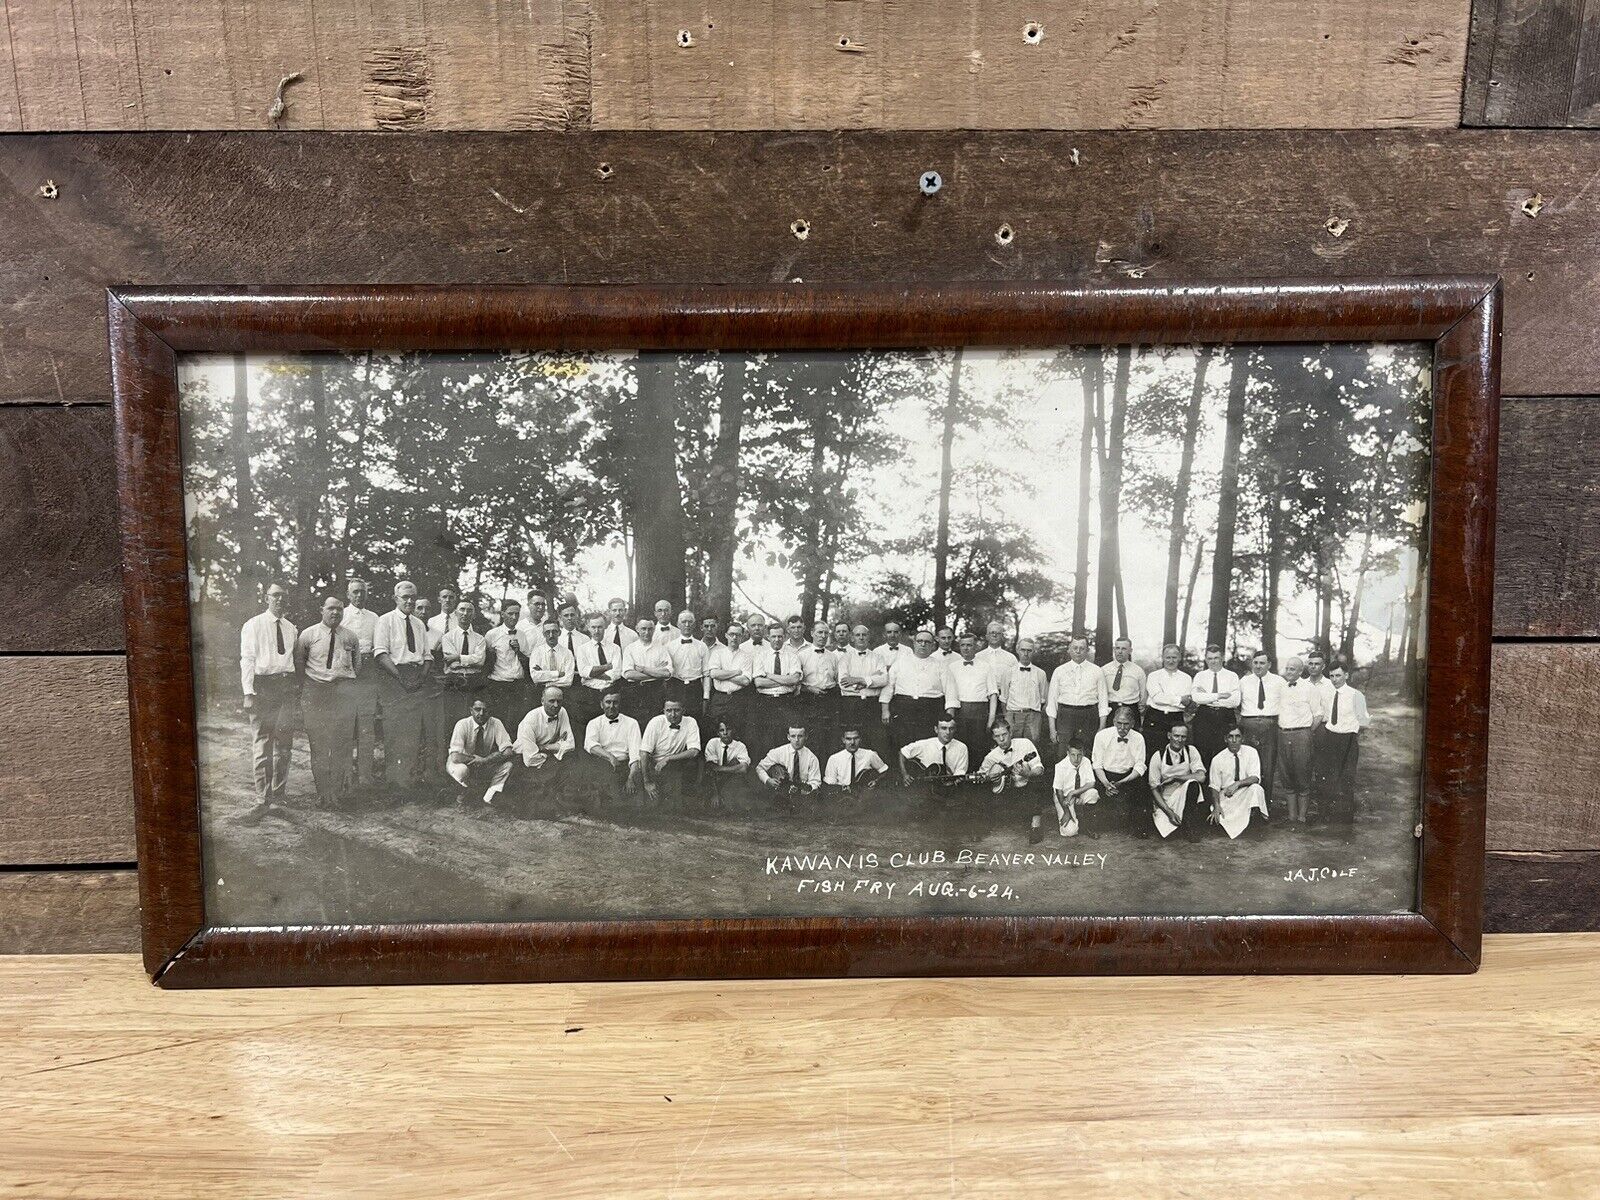 Antique 1924 Wood Framed Kawanis Club Beaver Valley Fish Fry Photo